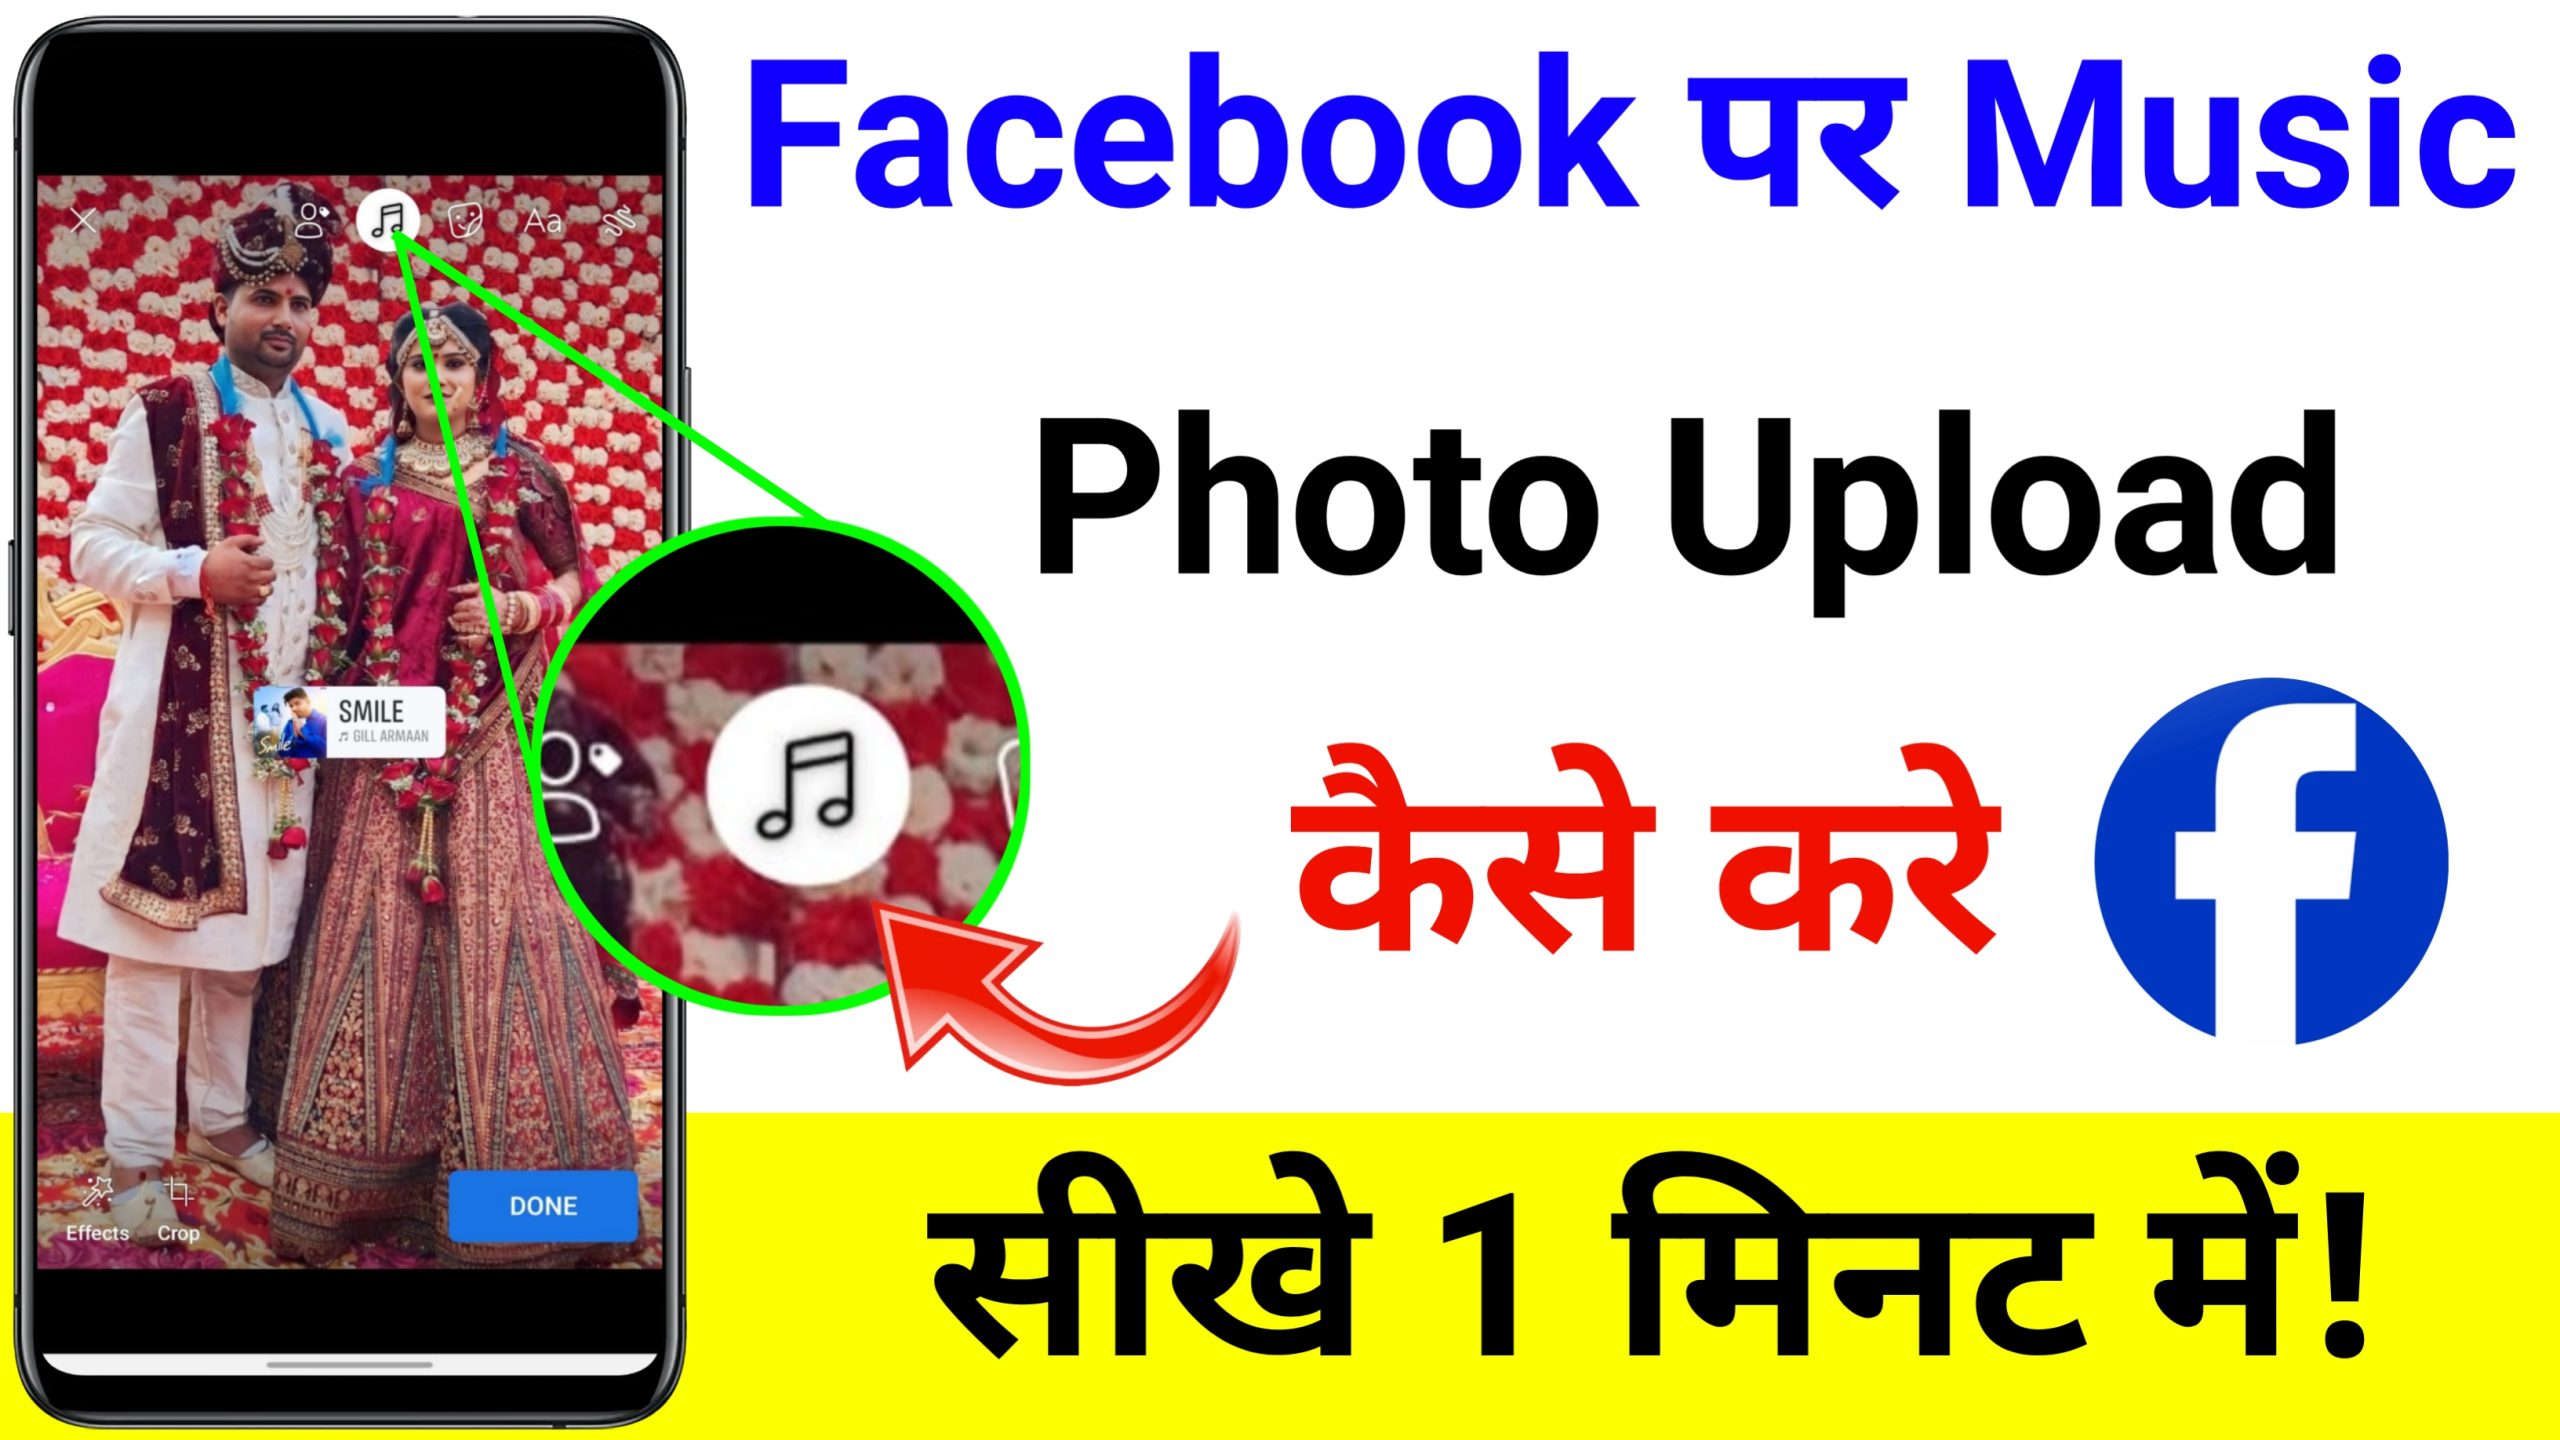 Facebook Par Music Wala Photo Kaise upload Kare | How to Upload Photo With Music on Facebook